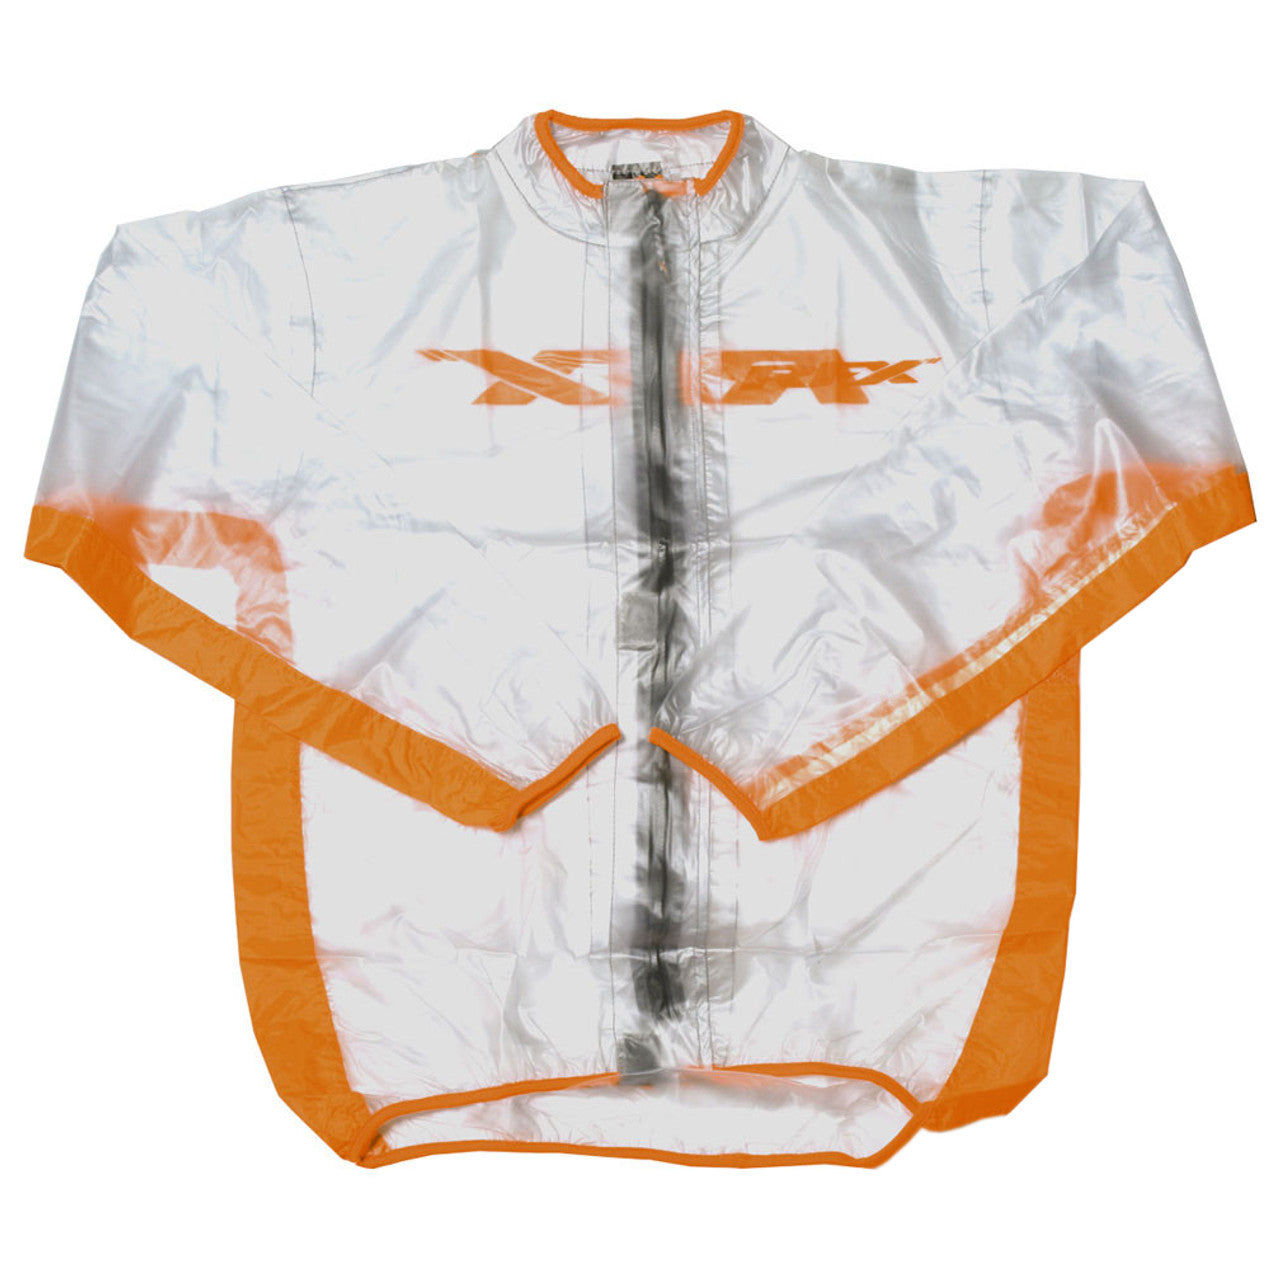 RFX Race Series YOUTH Wet Jacket Clear/Orange